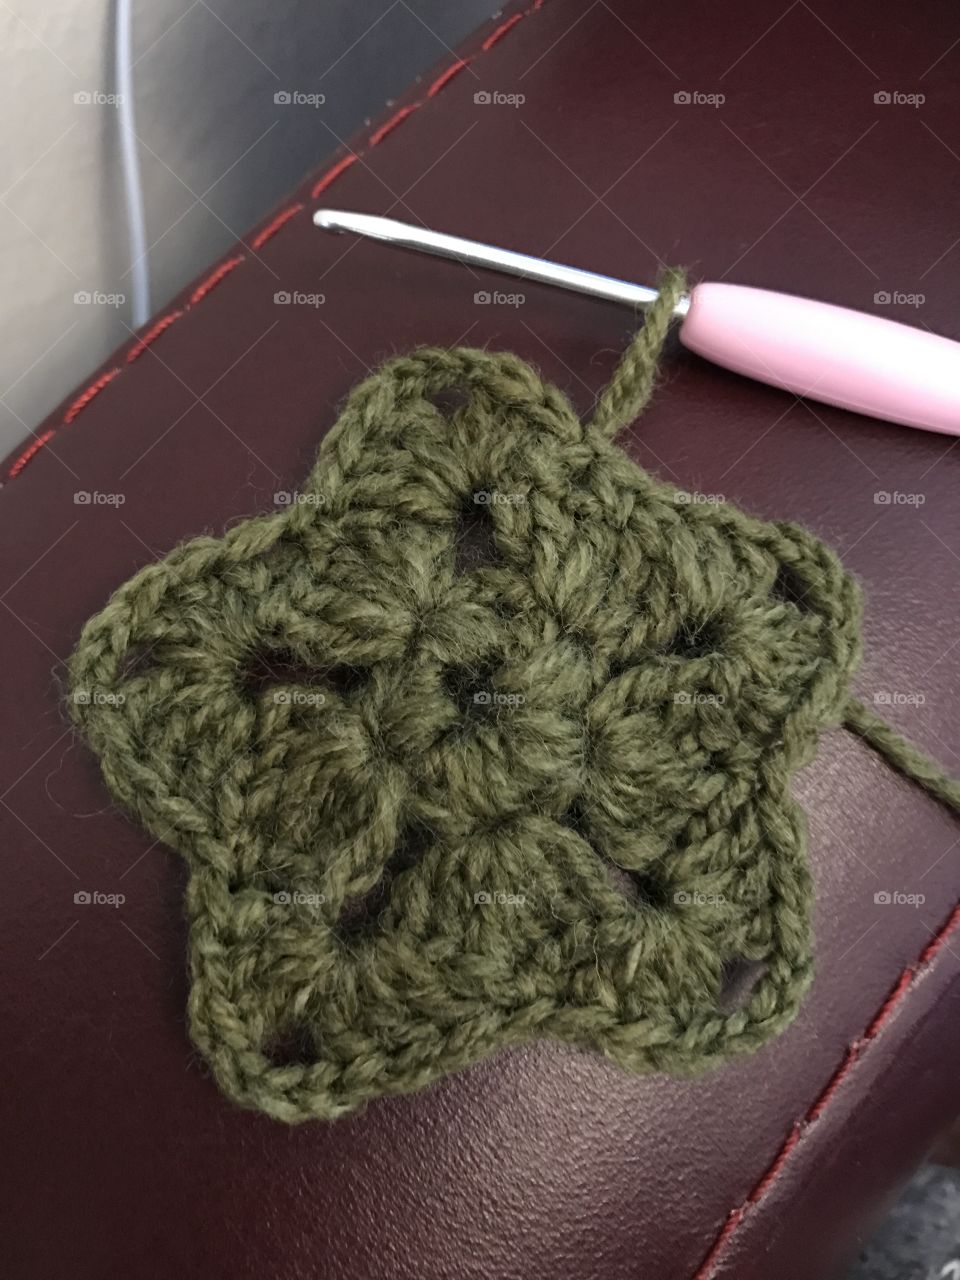 Crochet craft